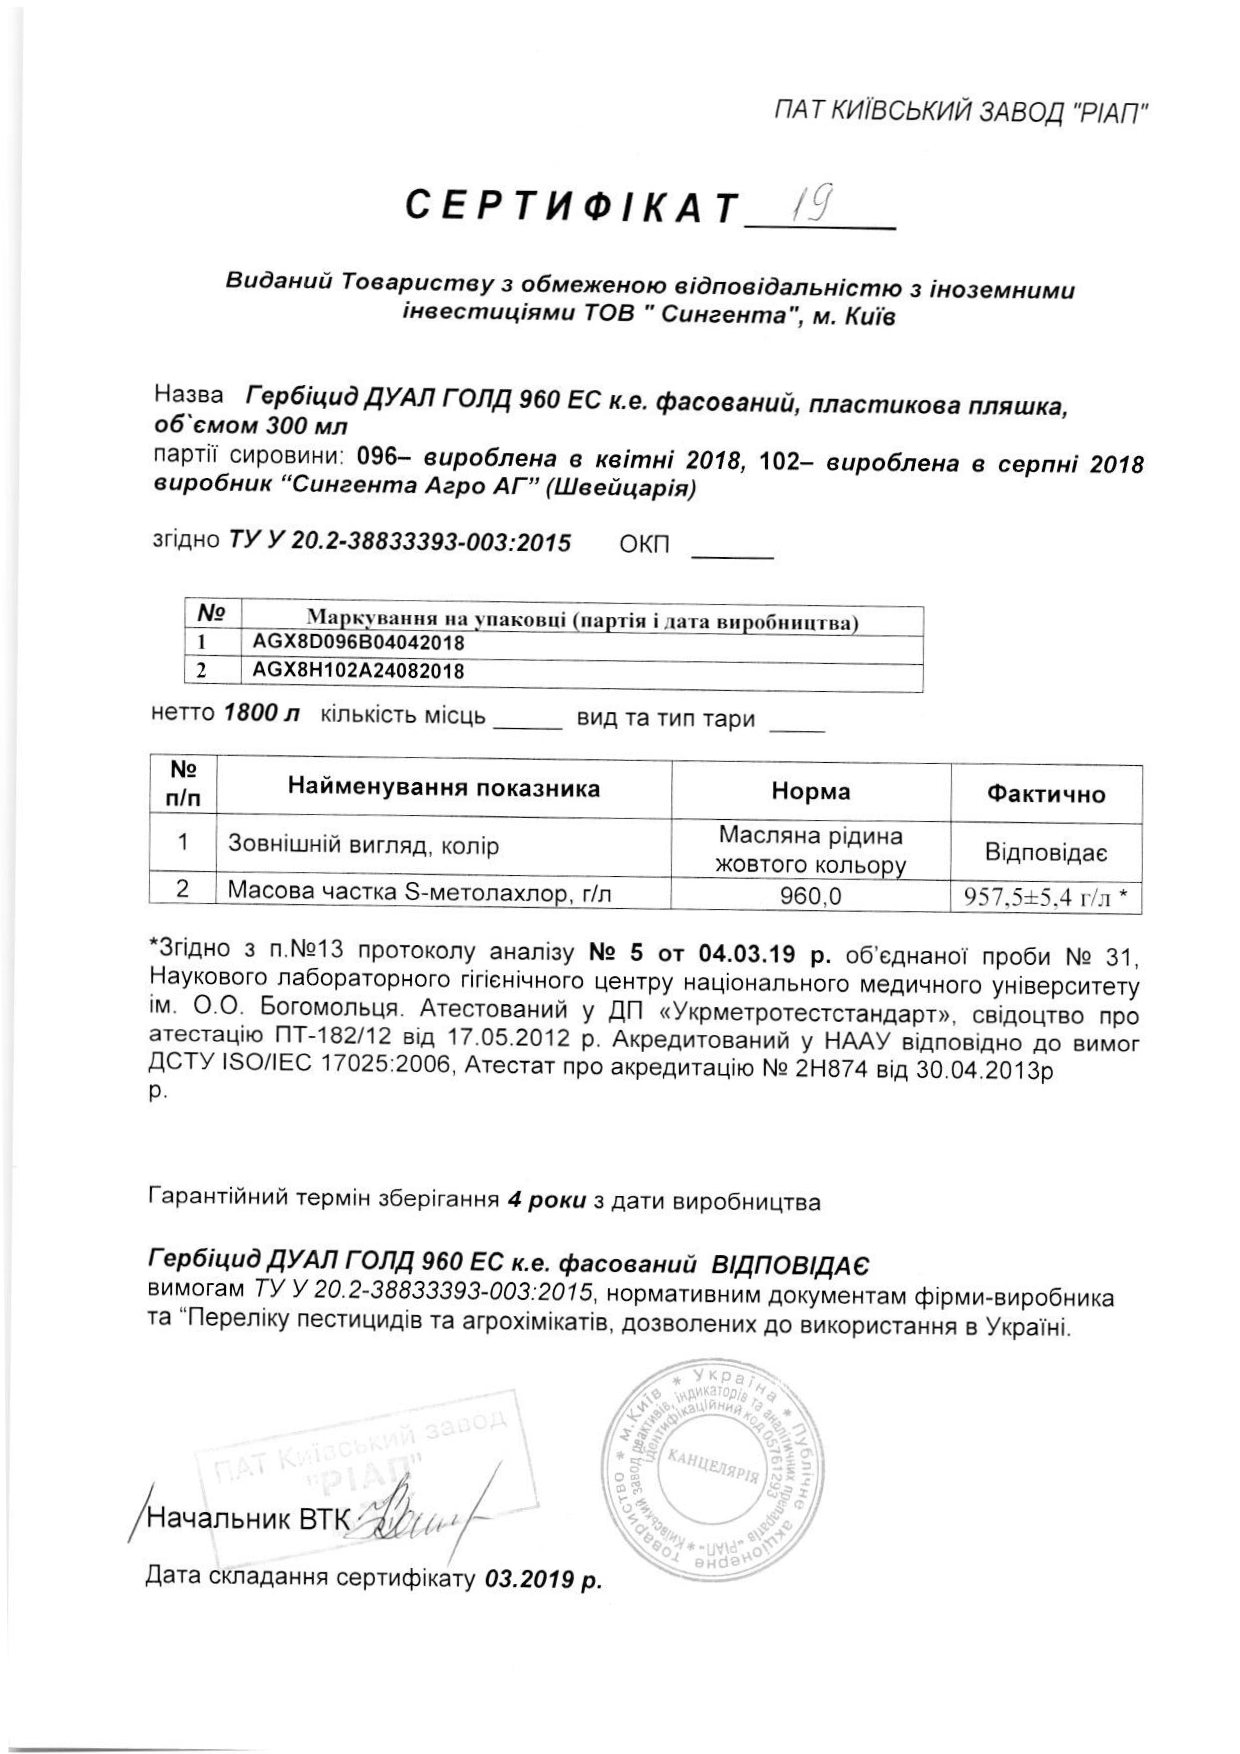 Сертифікат гербіцид Дуал Голд Syngenta